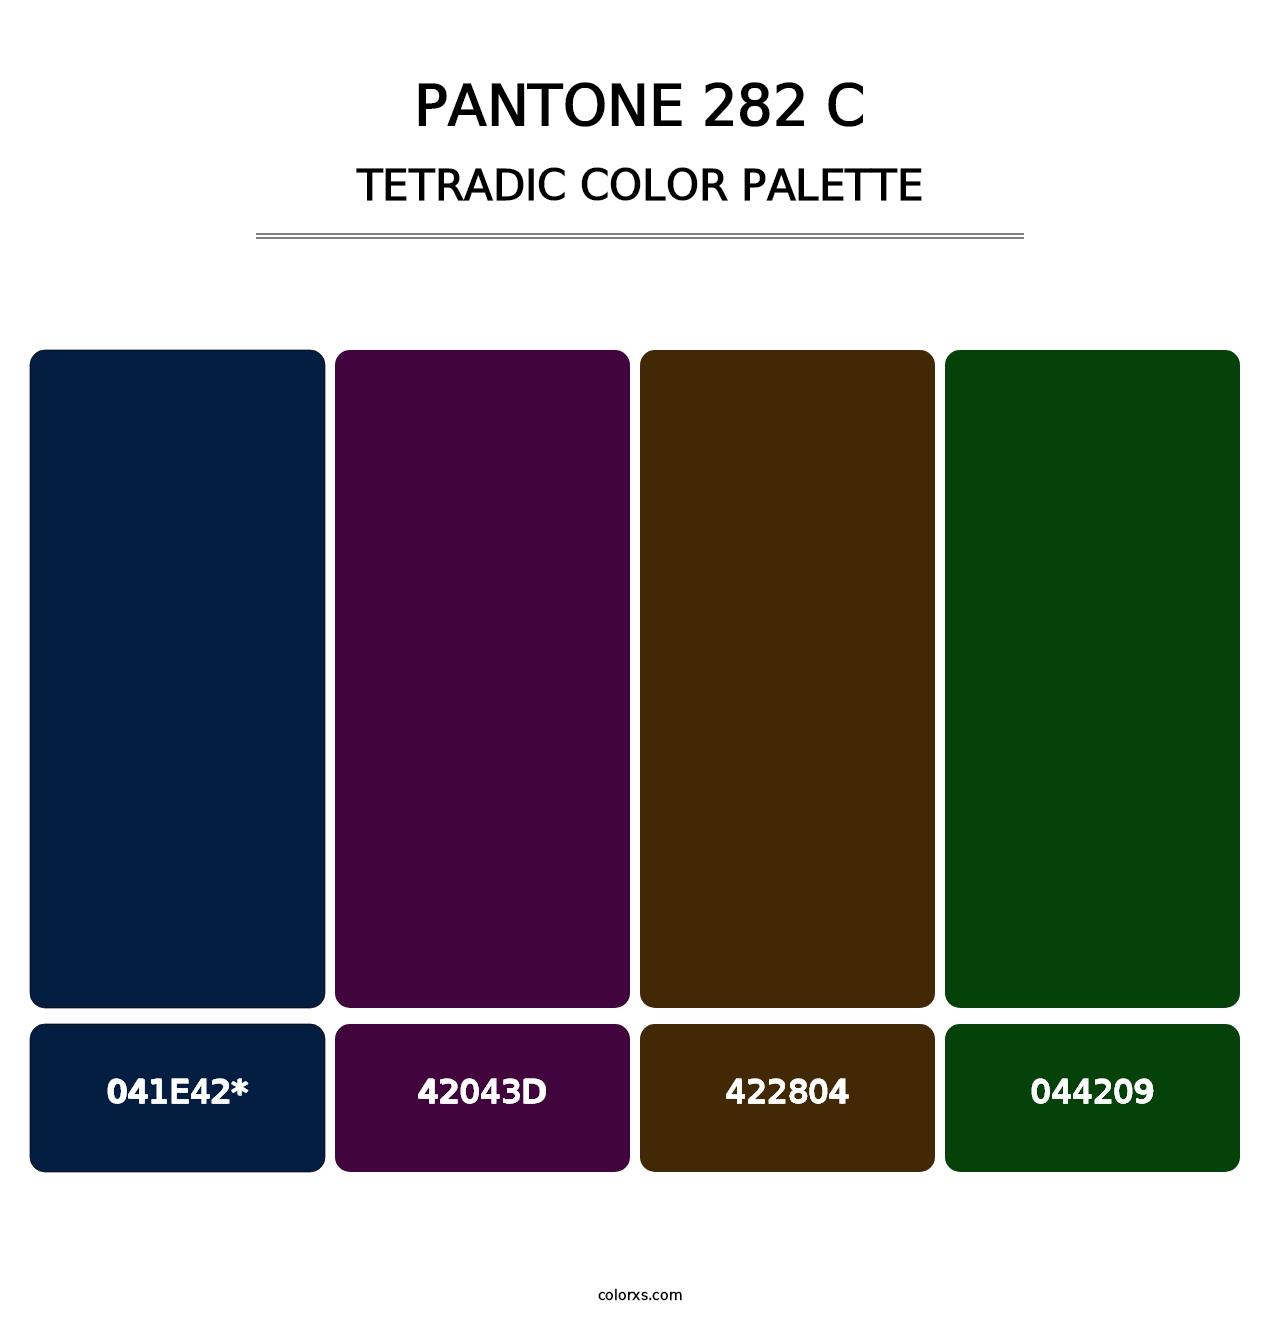 PANTONE 282 C - Tetradic Color Palette